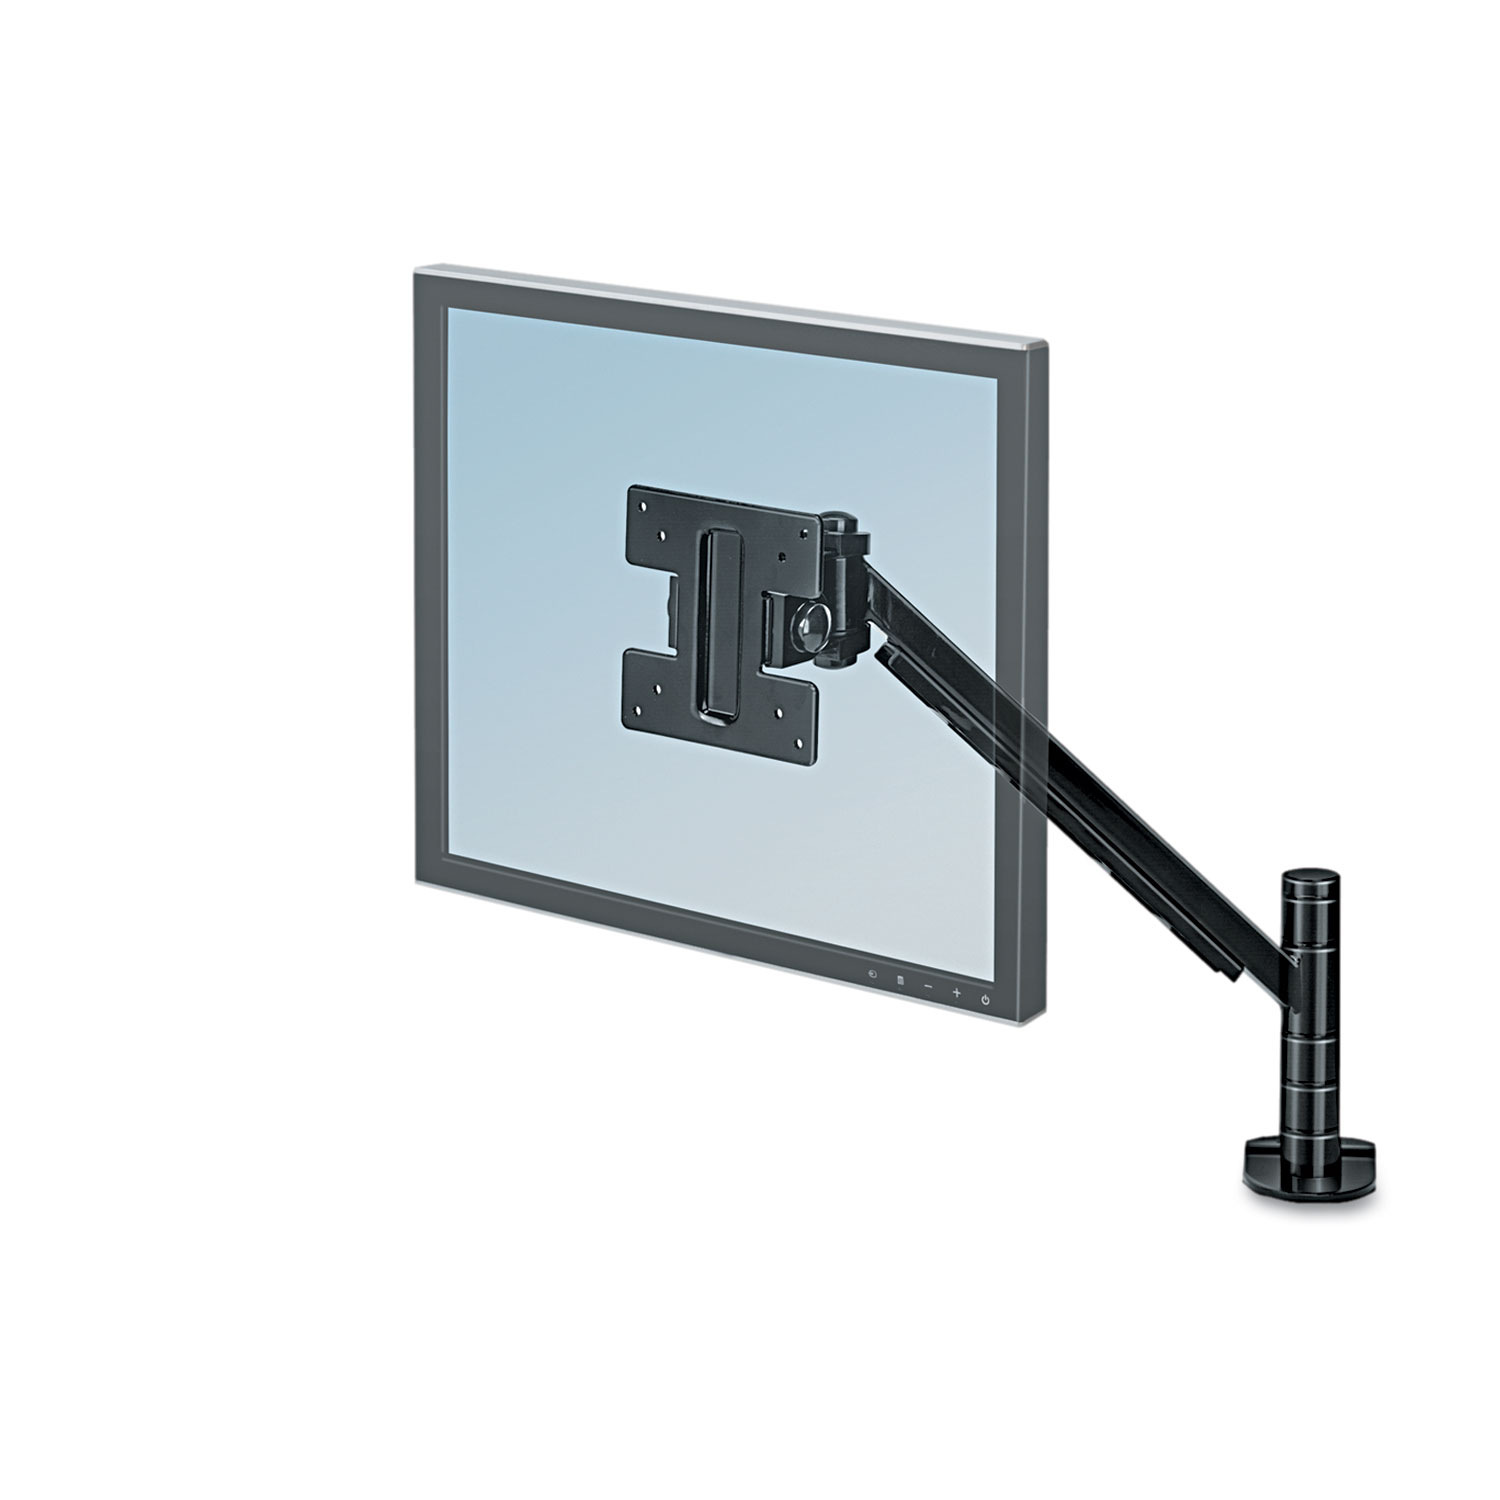 Desk-Mount Arm for Flat Panel Monitor, 14 1/2 x 4 3/4 x 24, Black